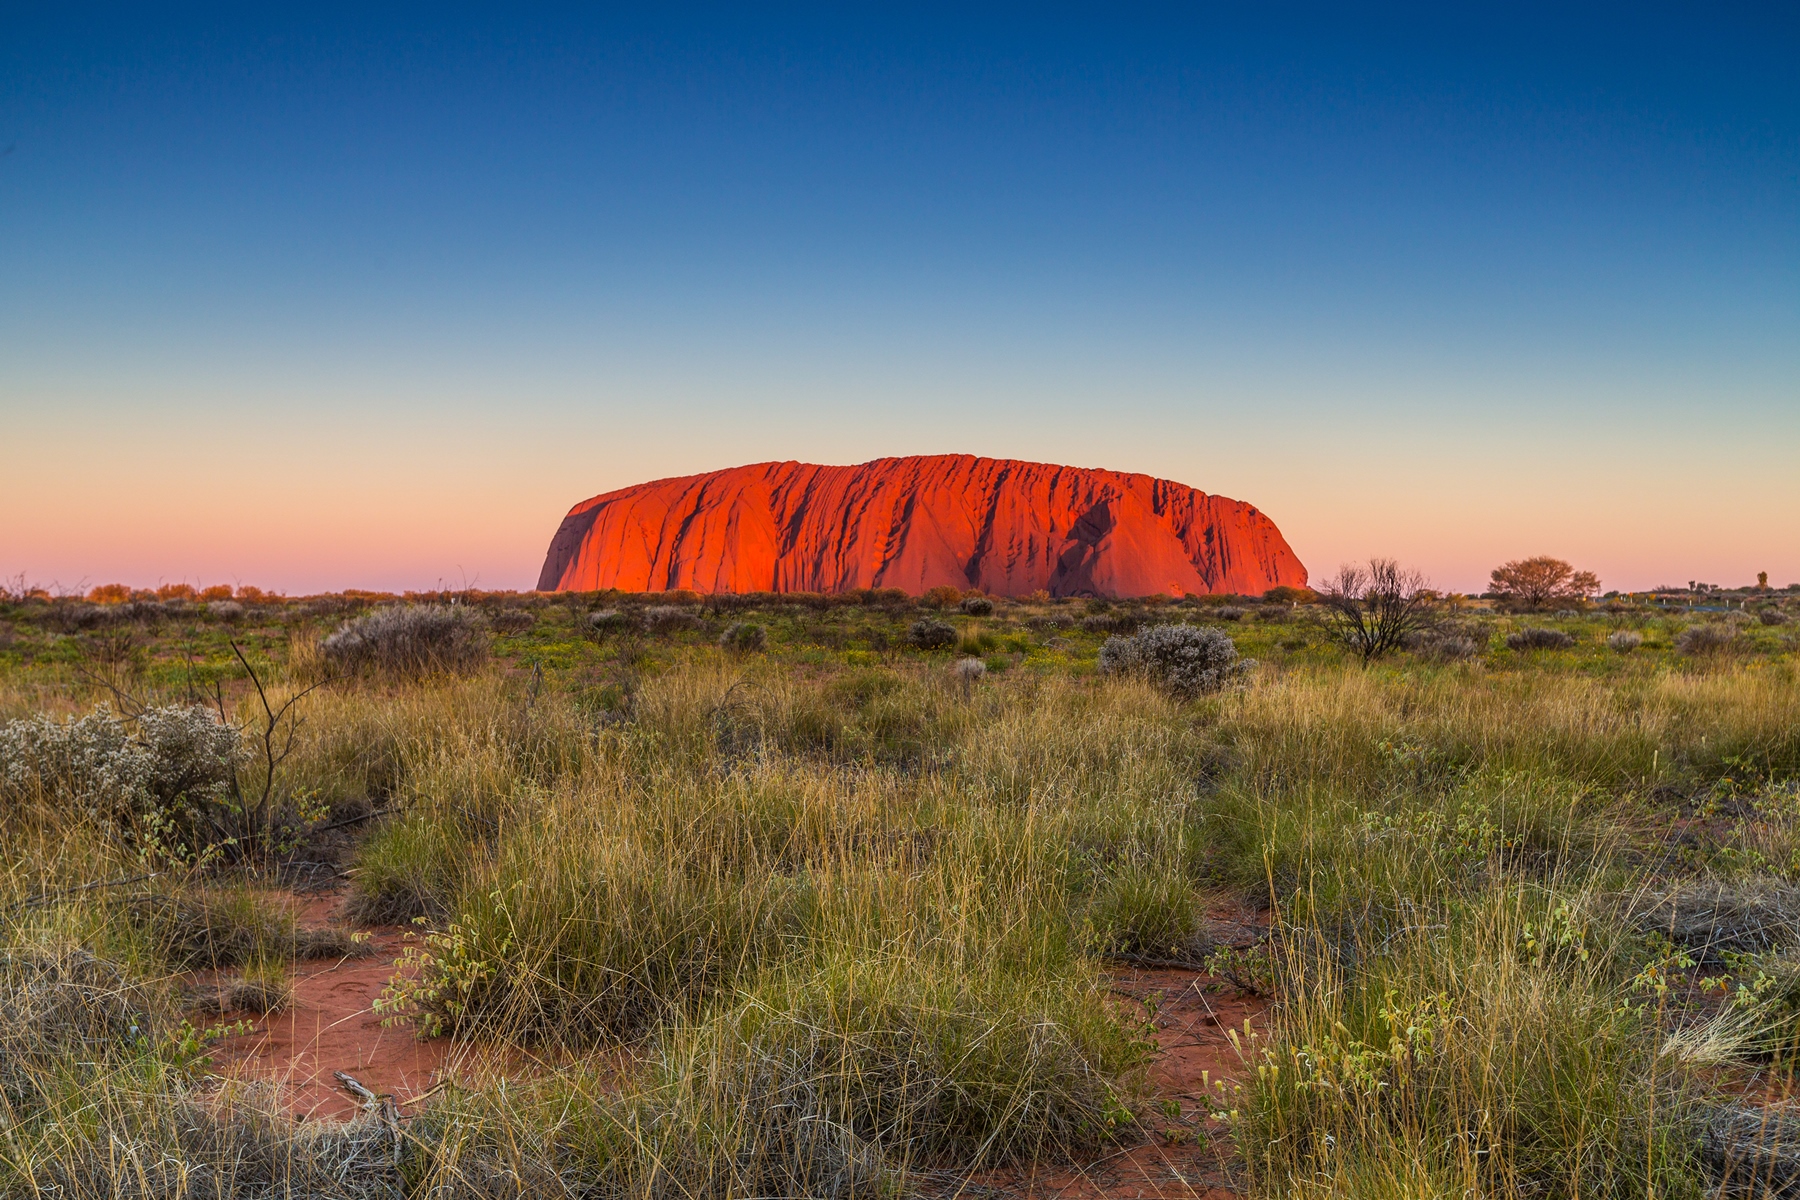 Ayers Rock in Australia